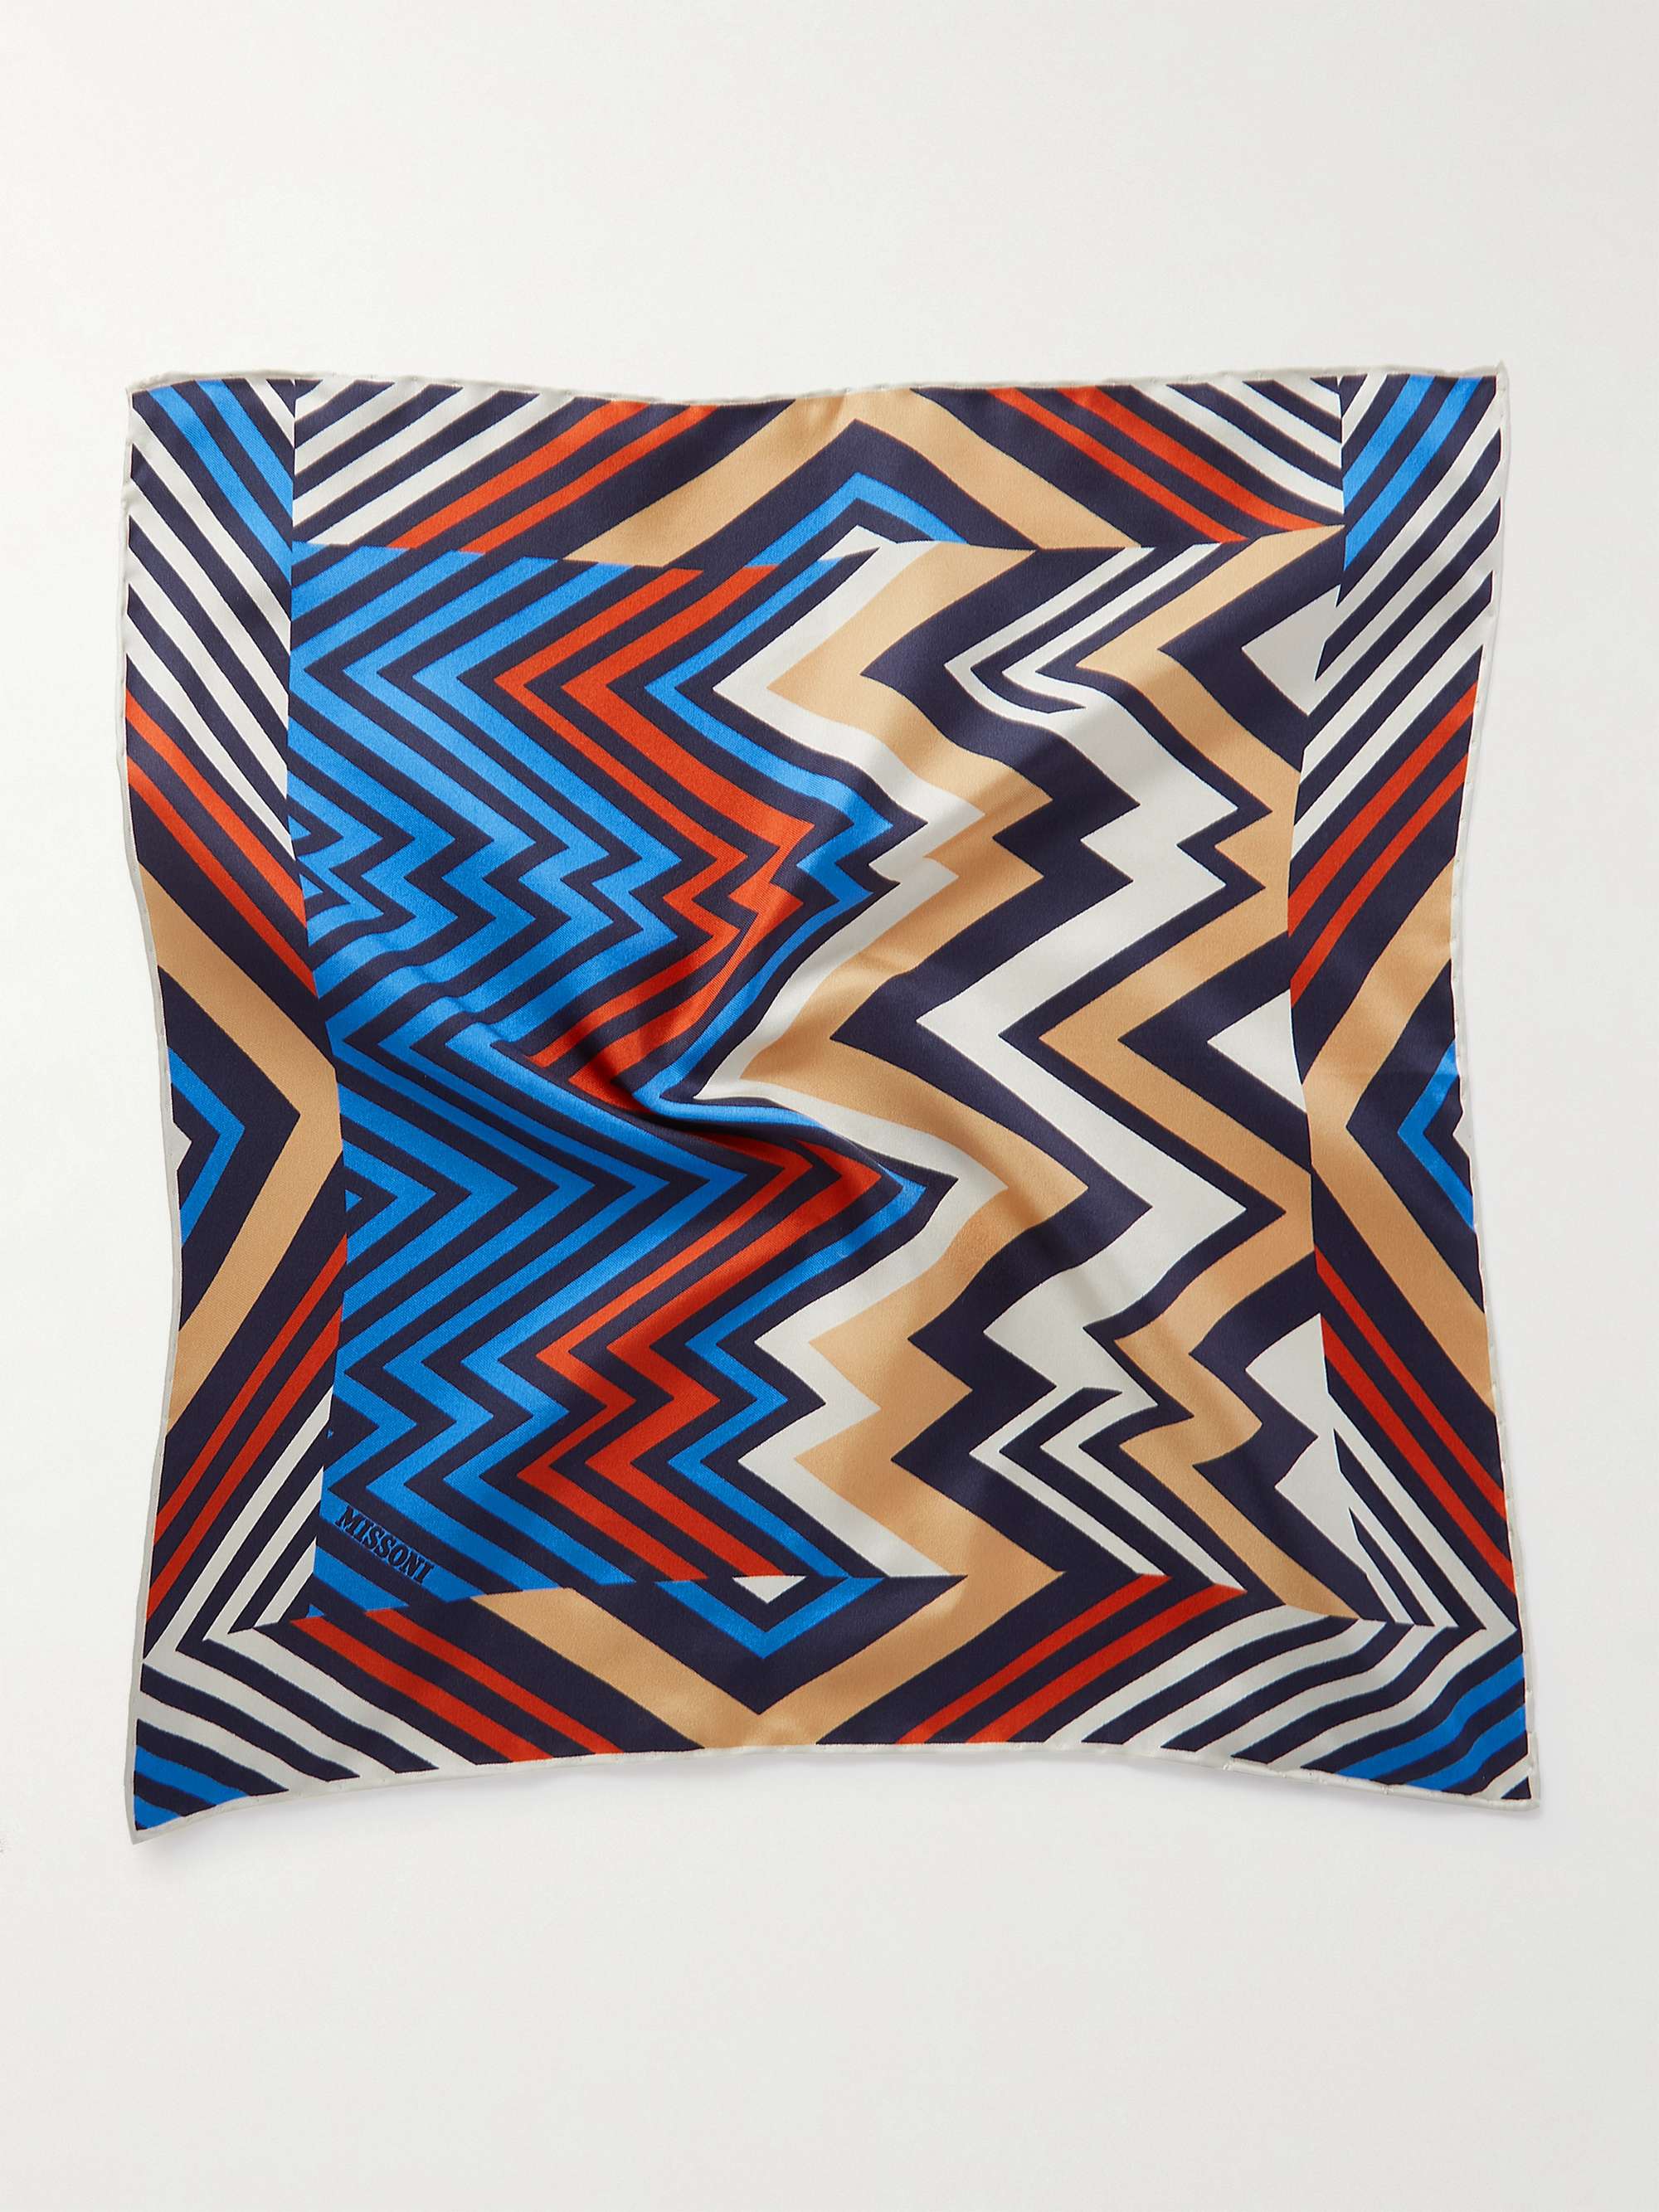 MISSONI Striped Silk Pocket Square